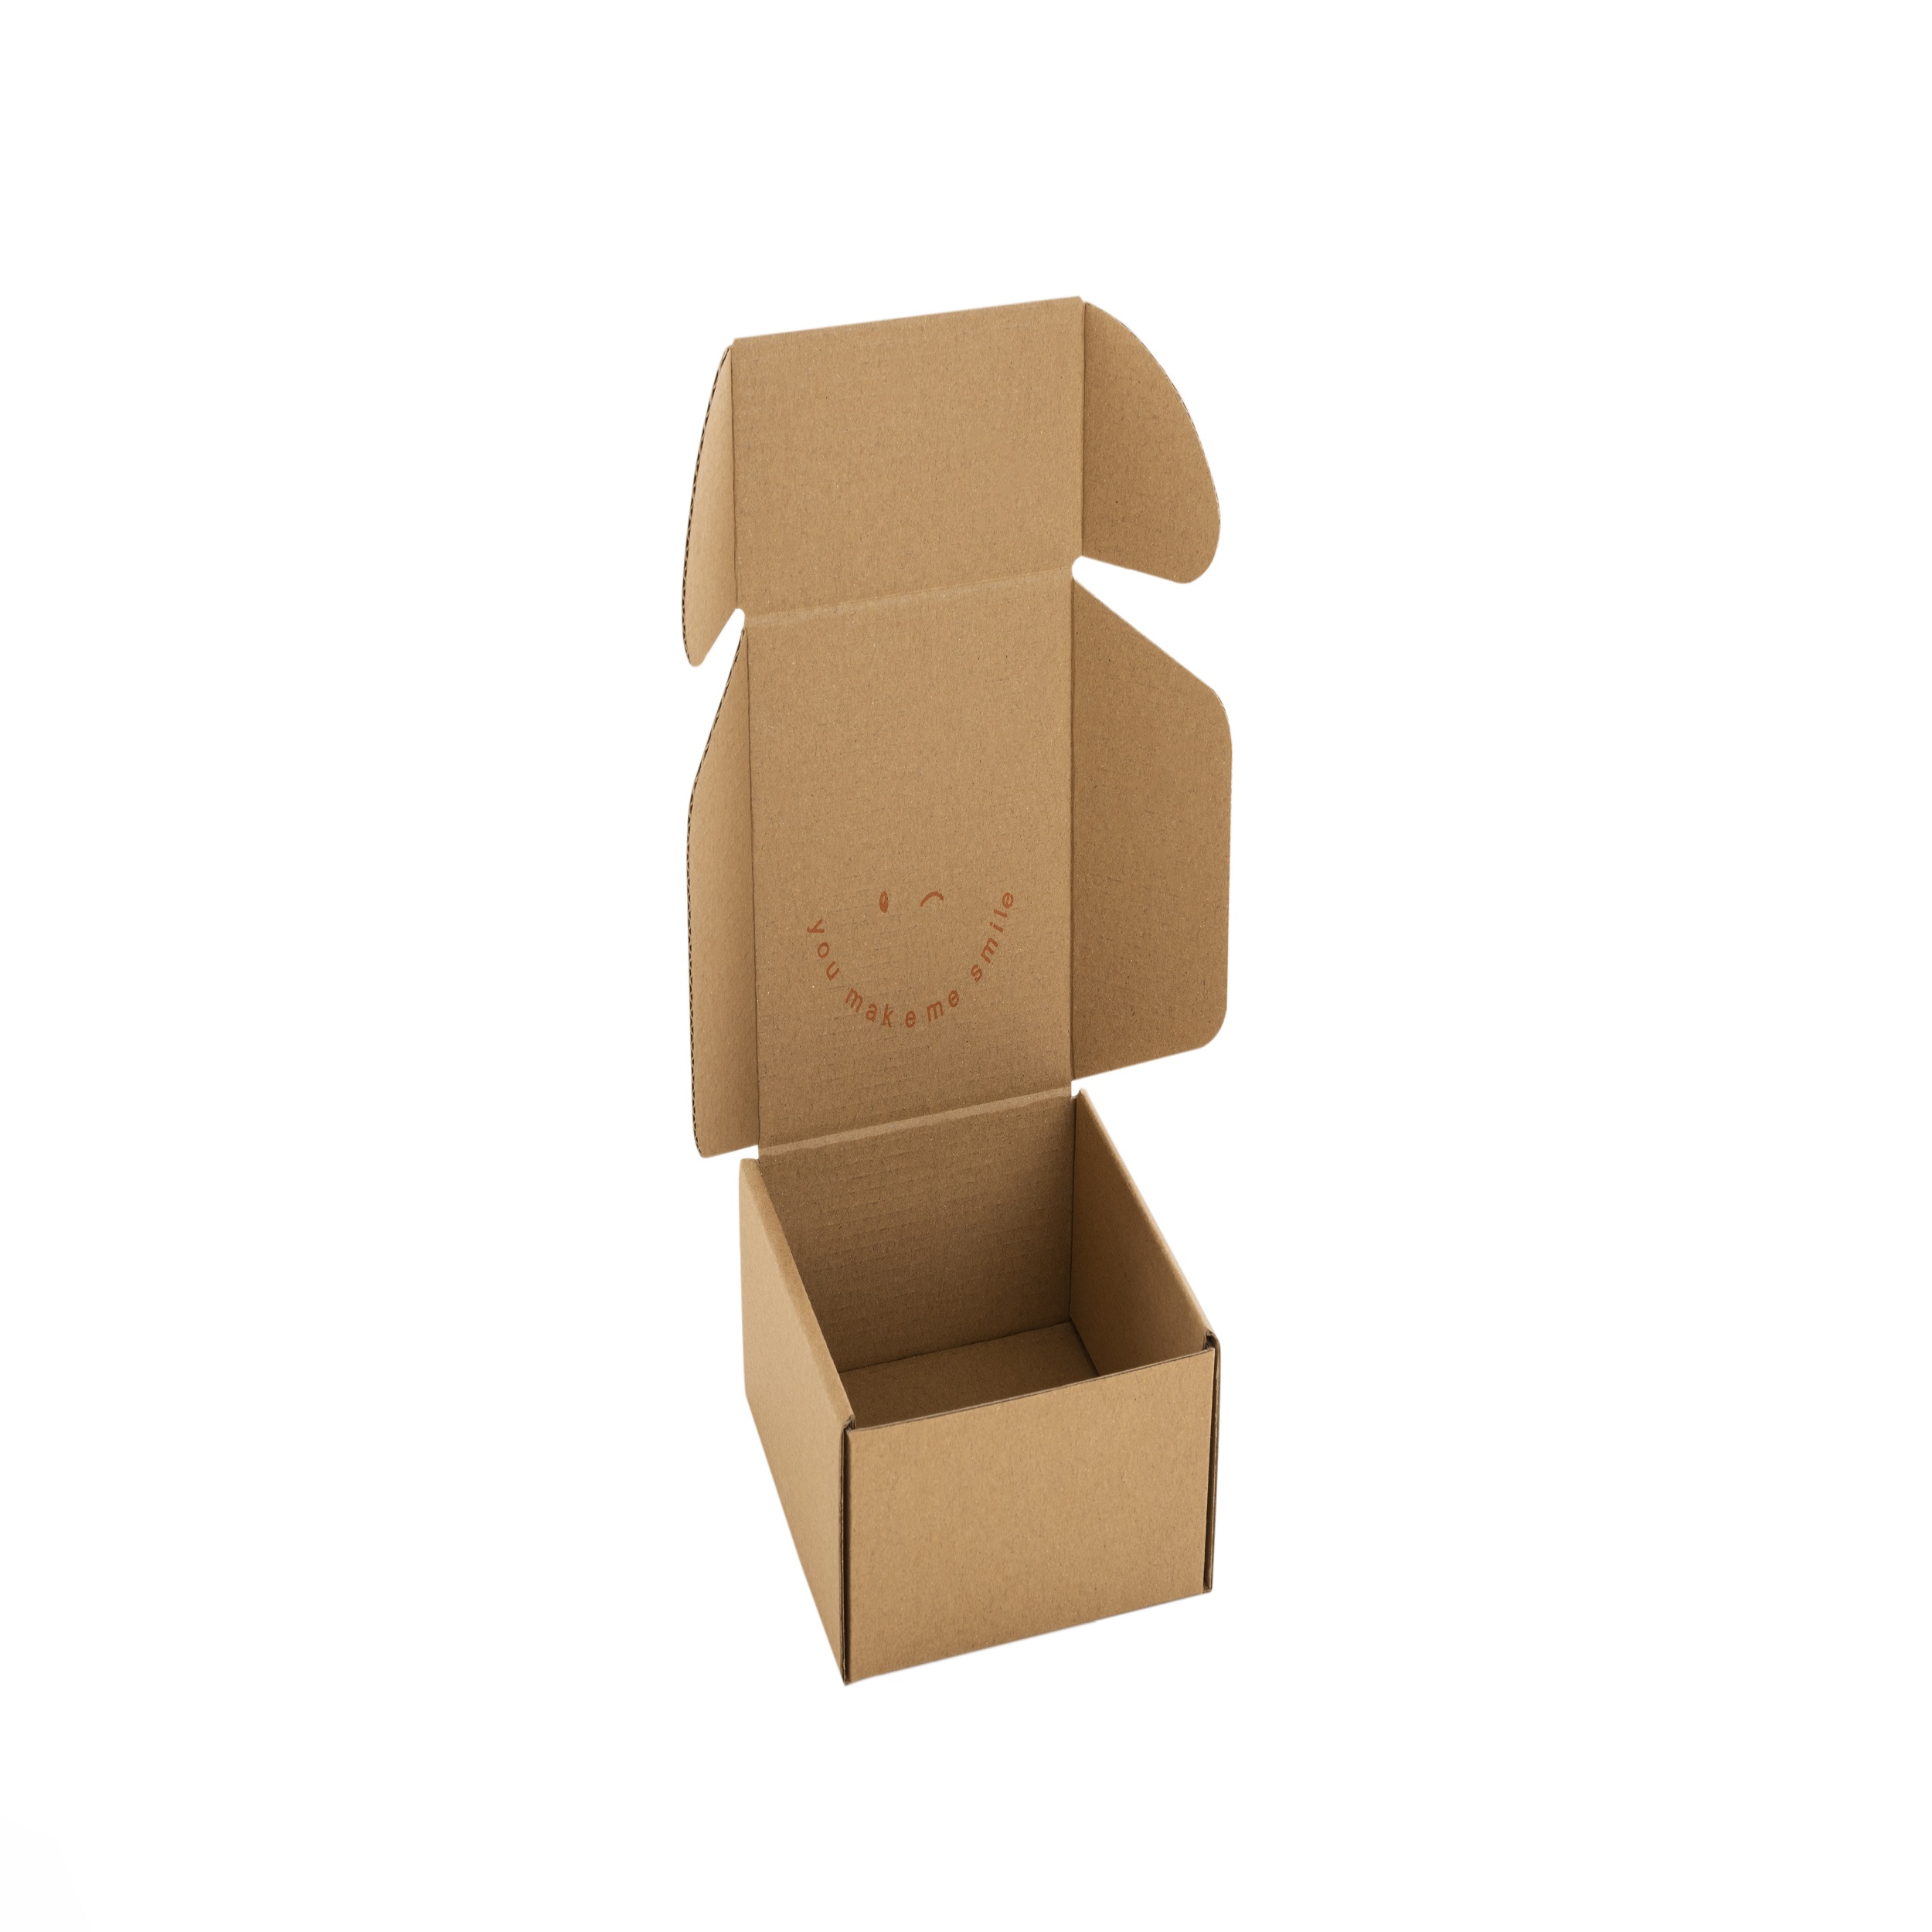 جعبه بسته بندی مدل کیبوردی مجموعه 50 عددی